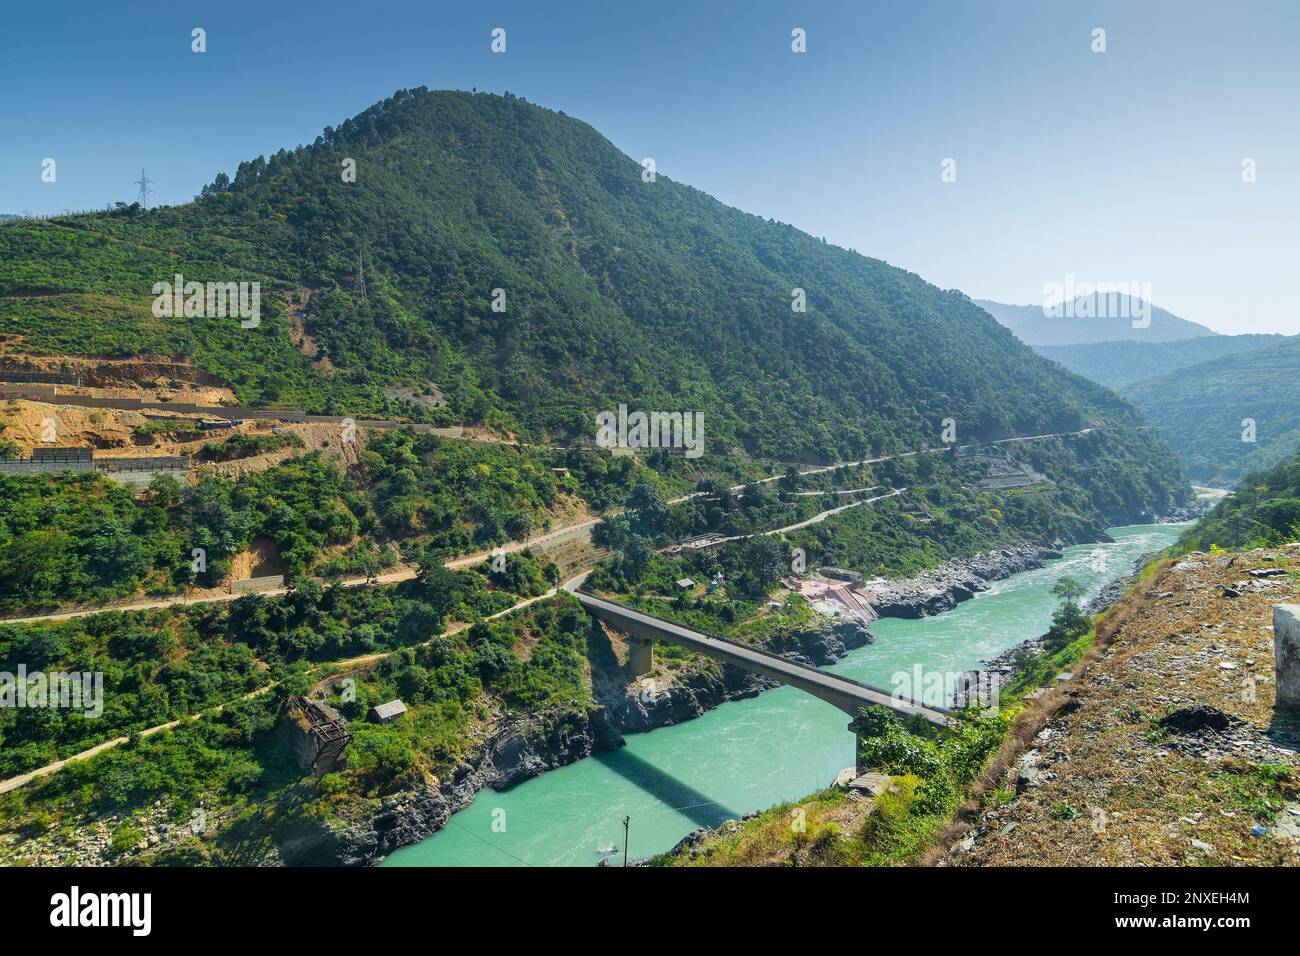 Ponte a Devprayag, Godly Confluence, Garhwal, Uttarakhand, India. Qui Alaknanda incontra il fiume Bhagirathi e si formano entrambi i fiumi Gange Foto Stock